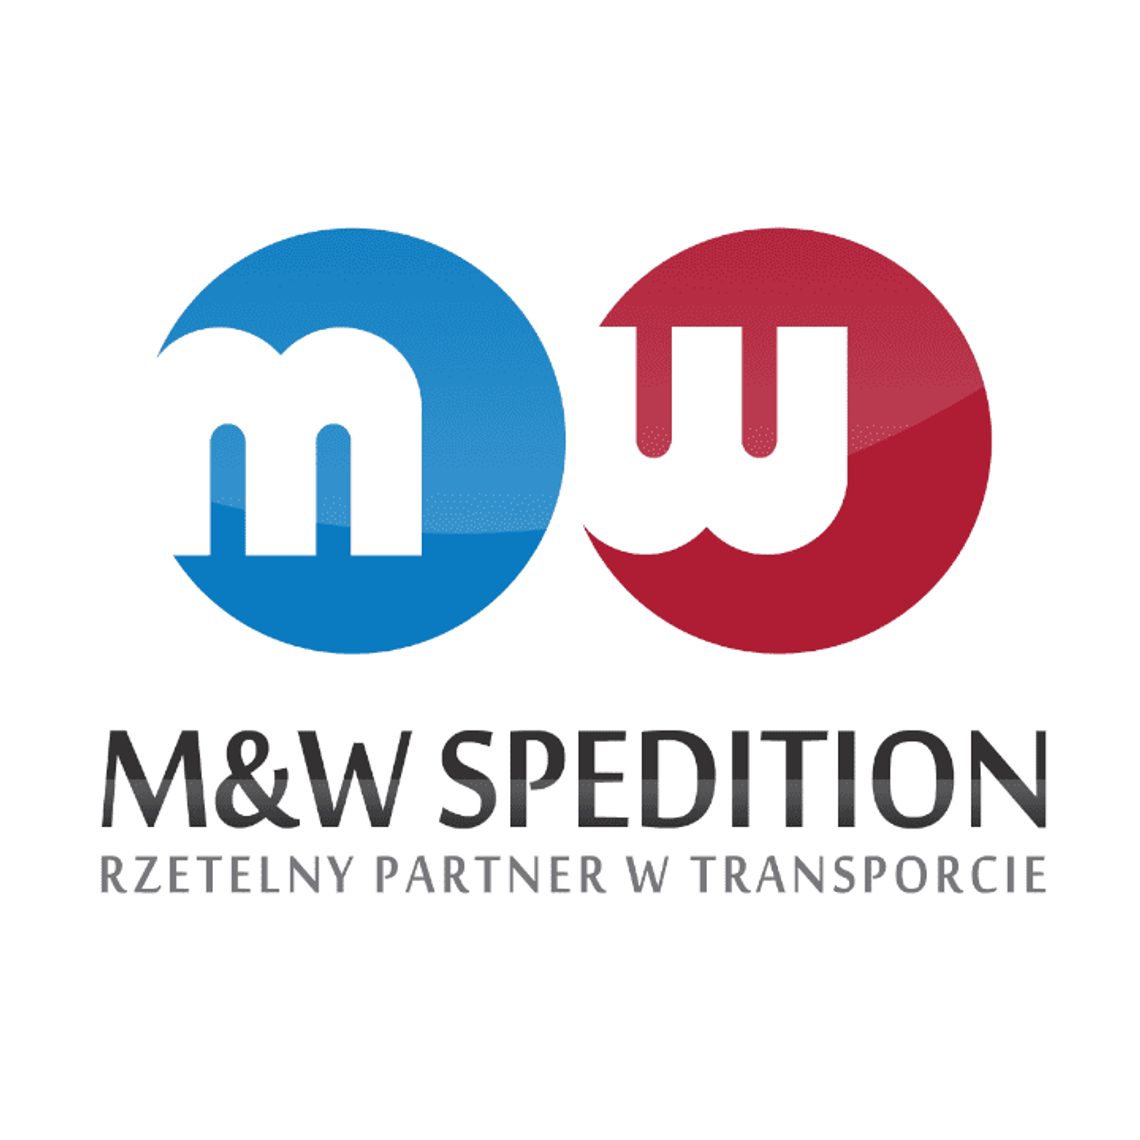 M&W Spedition